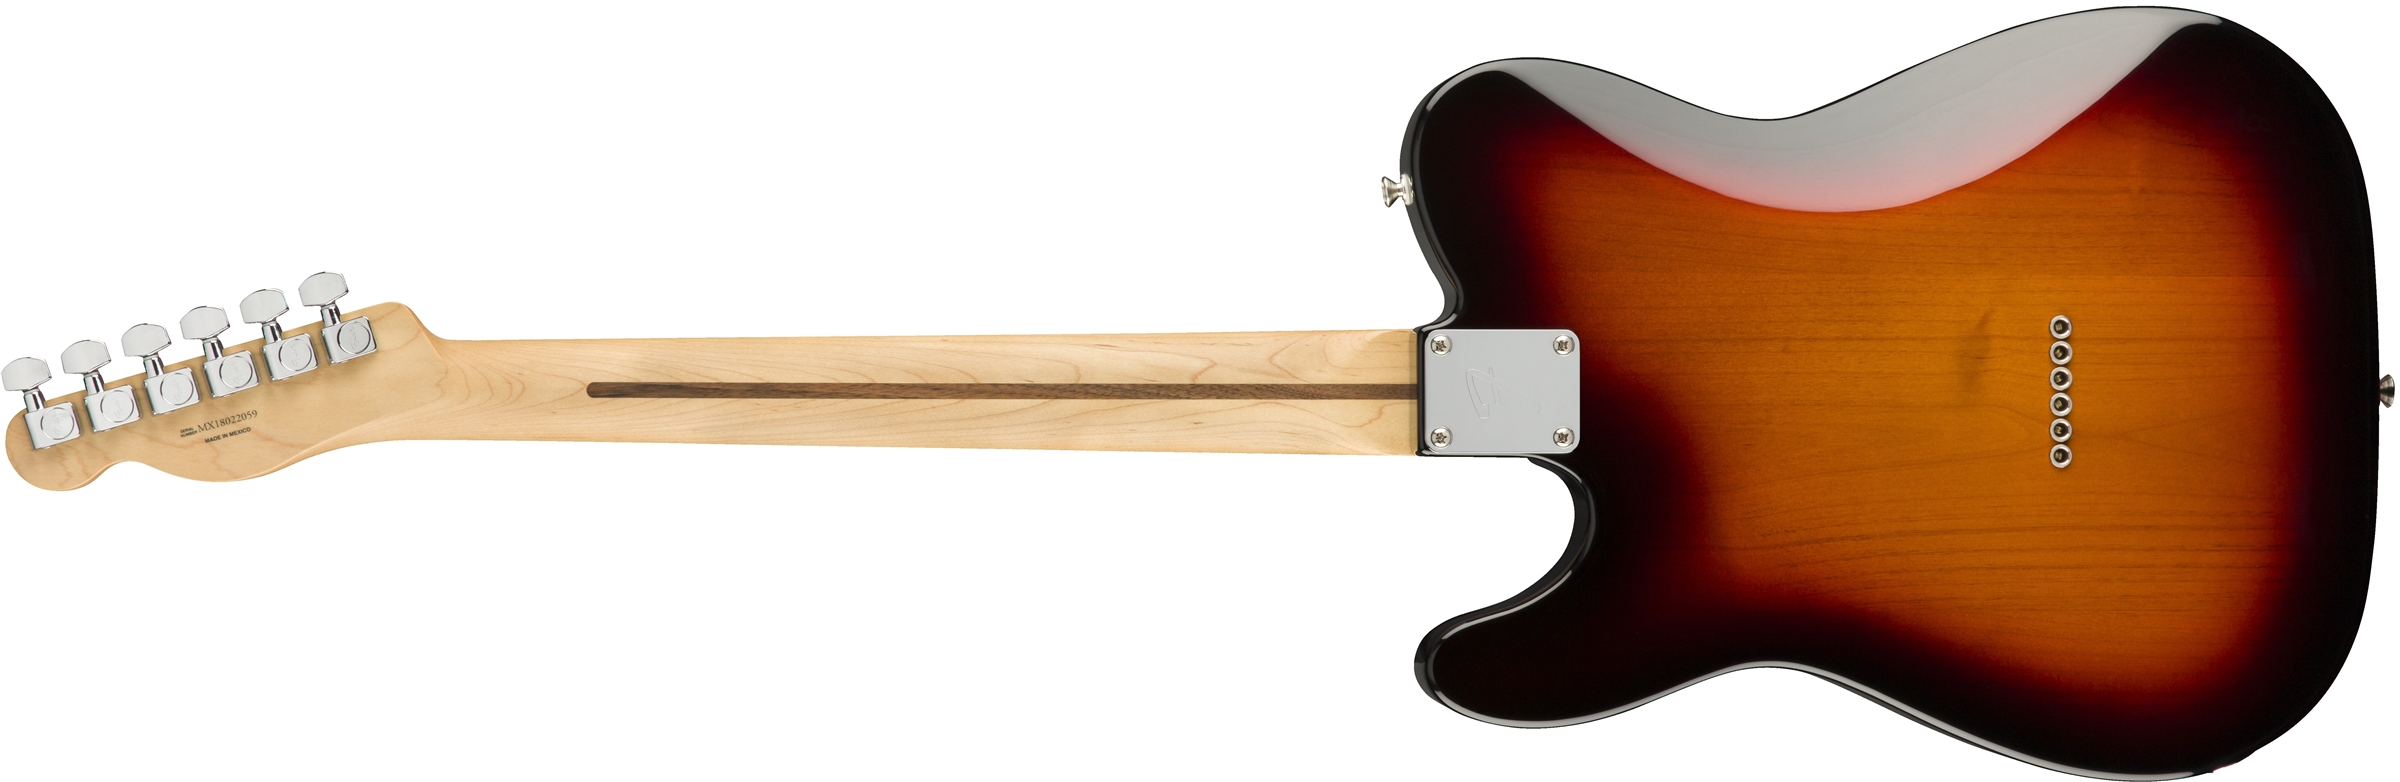 Fender Tele Player Mex Hh Pf - 3-color Sunburst - Televorm elektrische gitaar - Variation 1